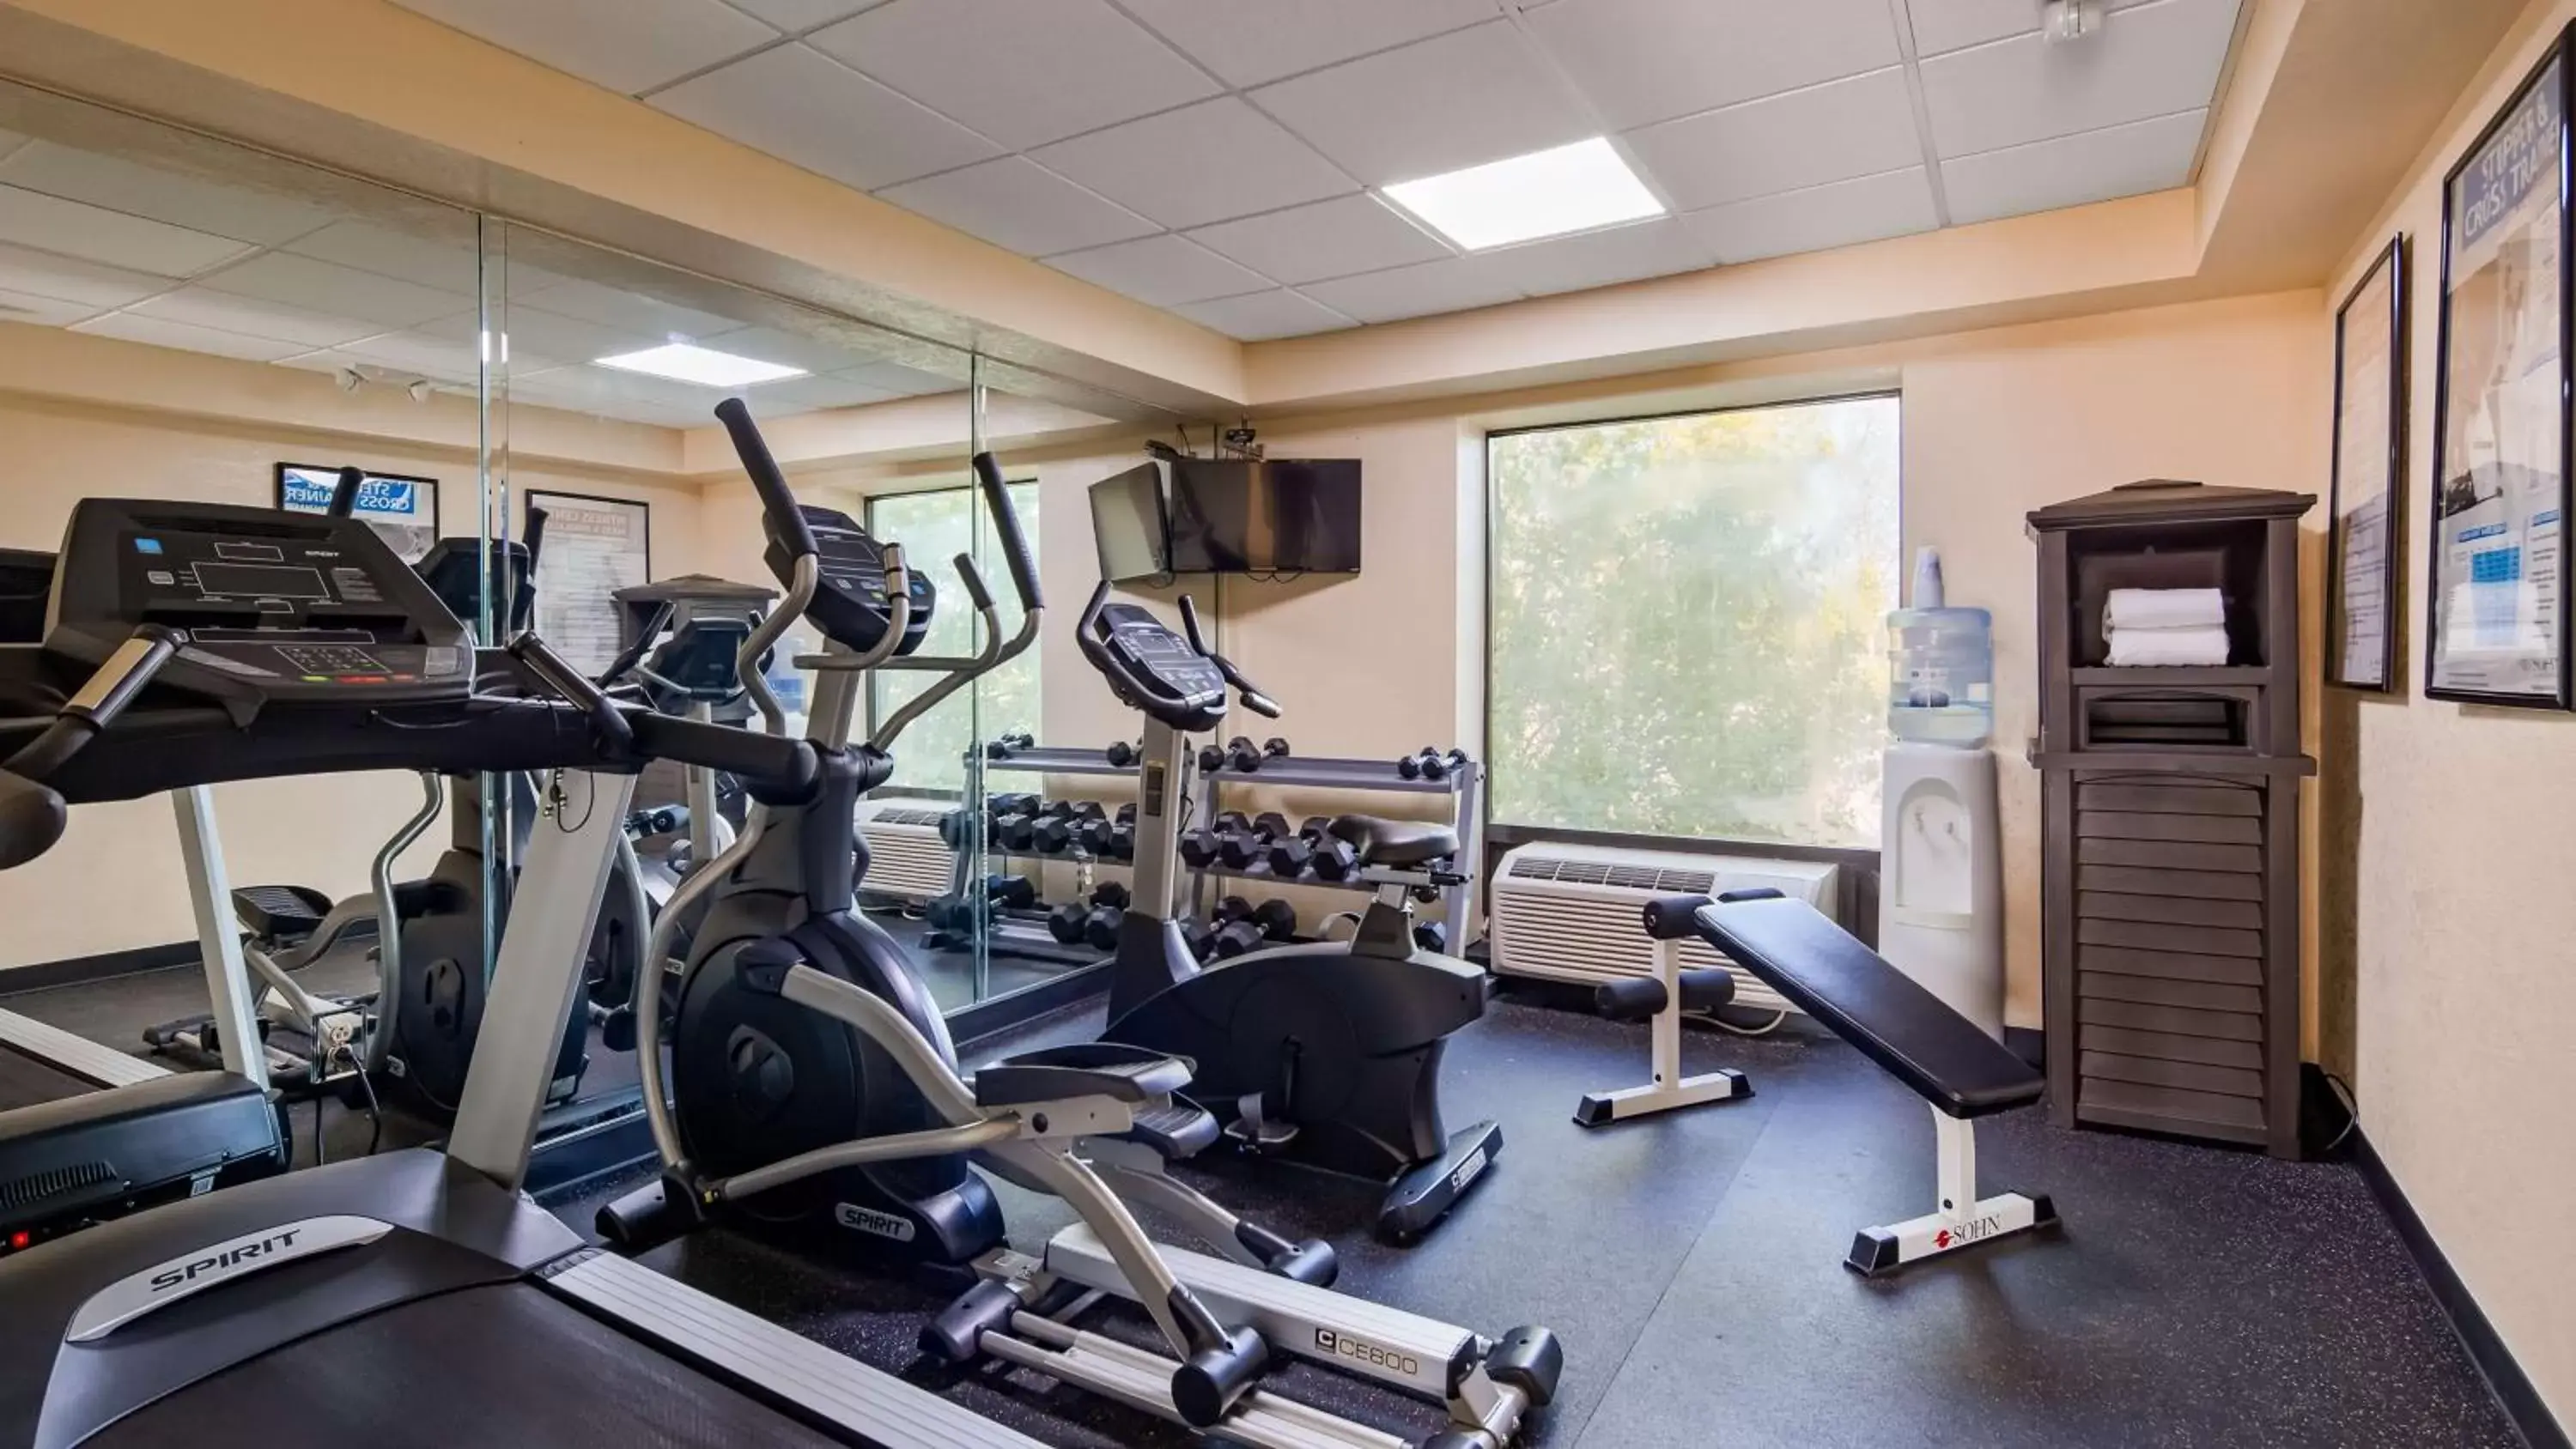 Fitness centre/facilities, Fitness Center/Facilities in Best Western Thunderbird Motel